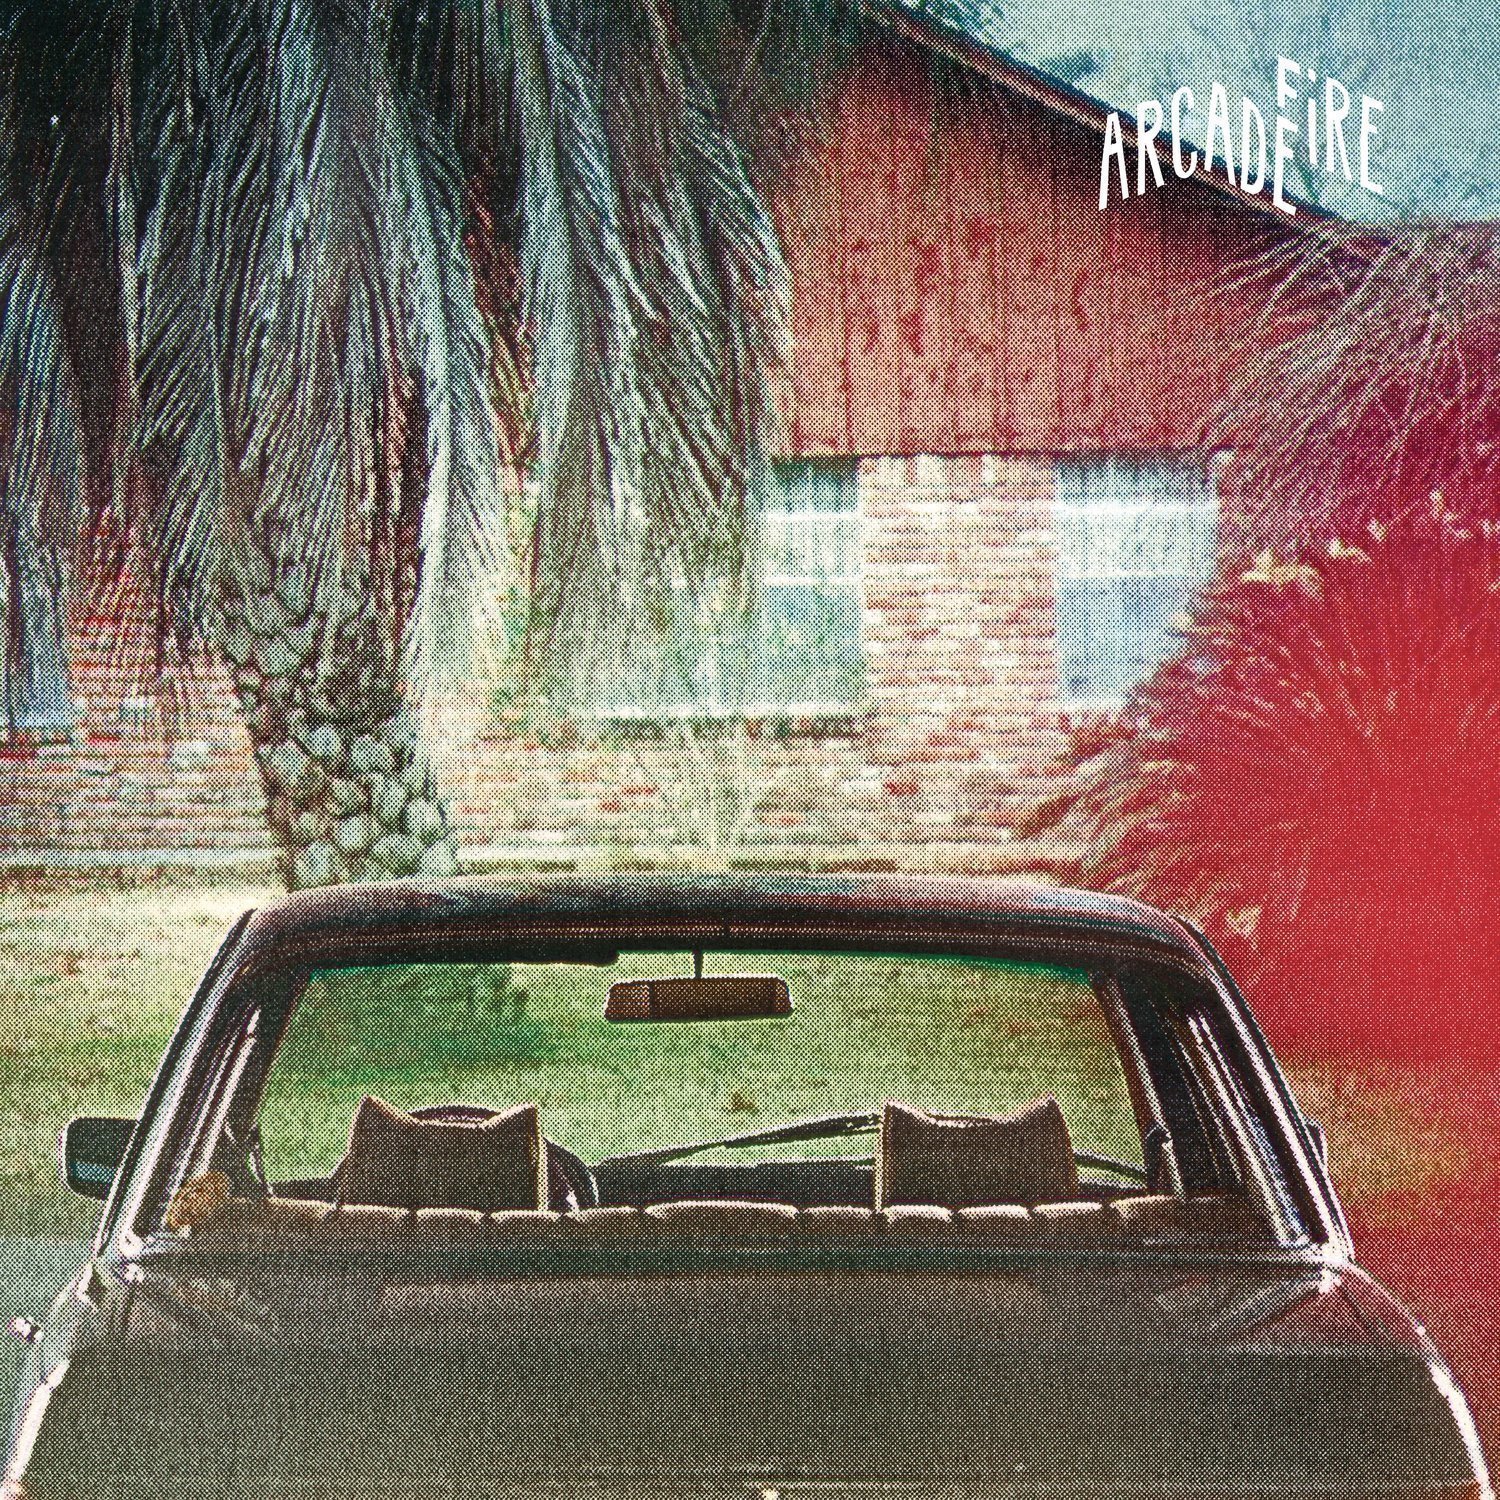 Vinyl Record Arcade Fire Suburbs (2 LP)